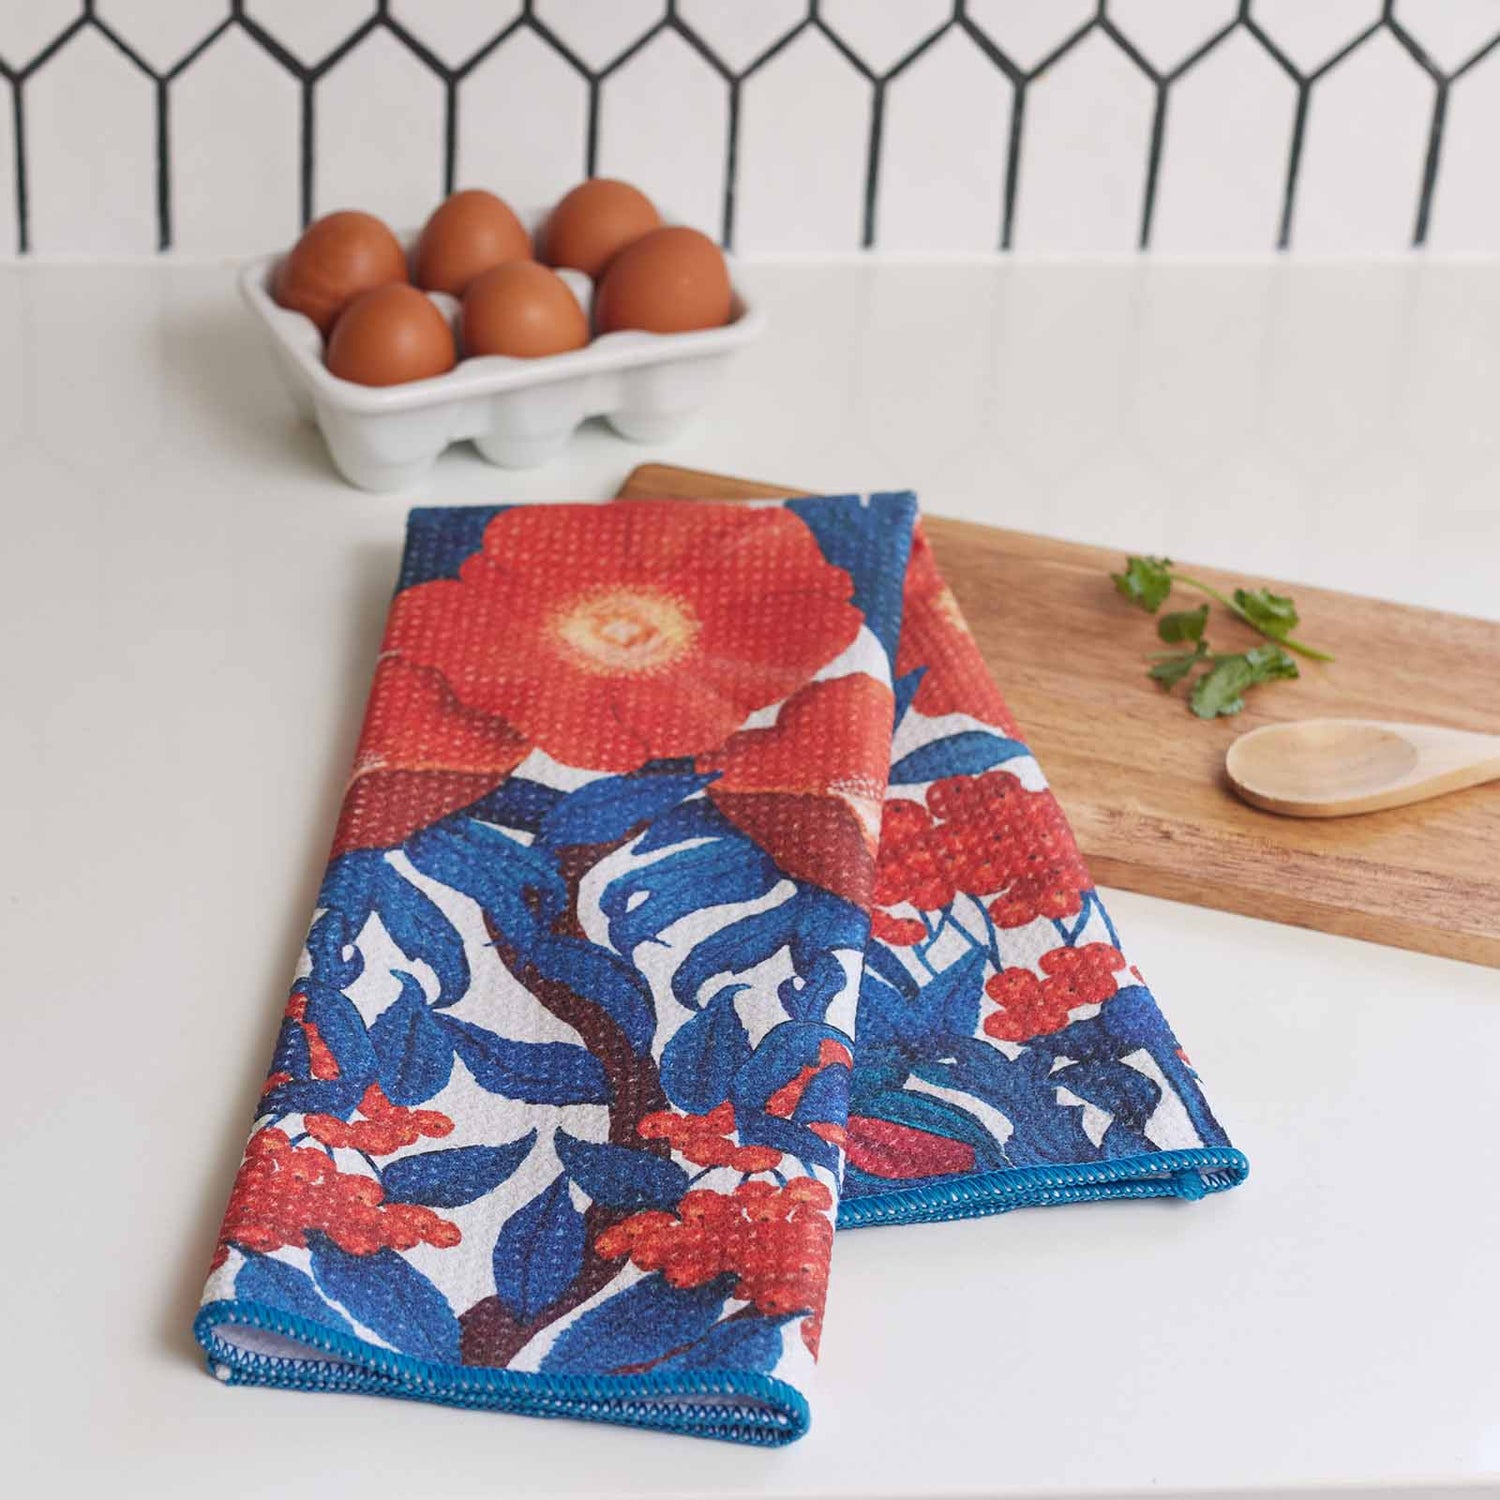 Poppies Red blu Kitchen Tea Towel